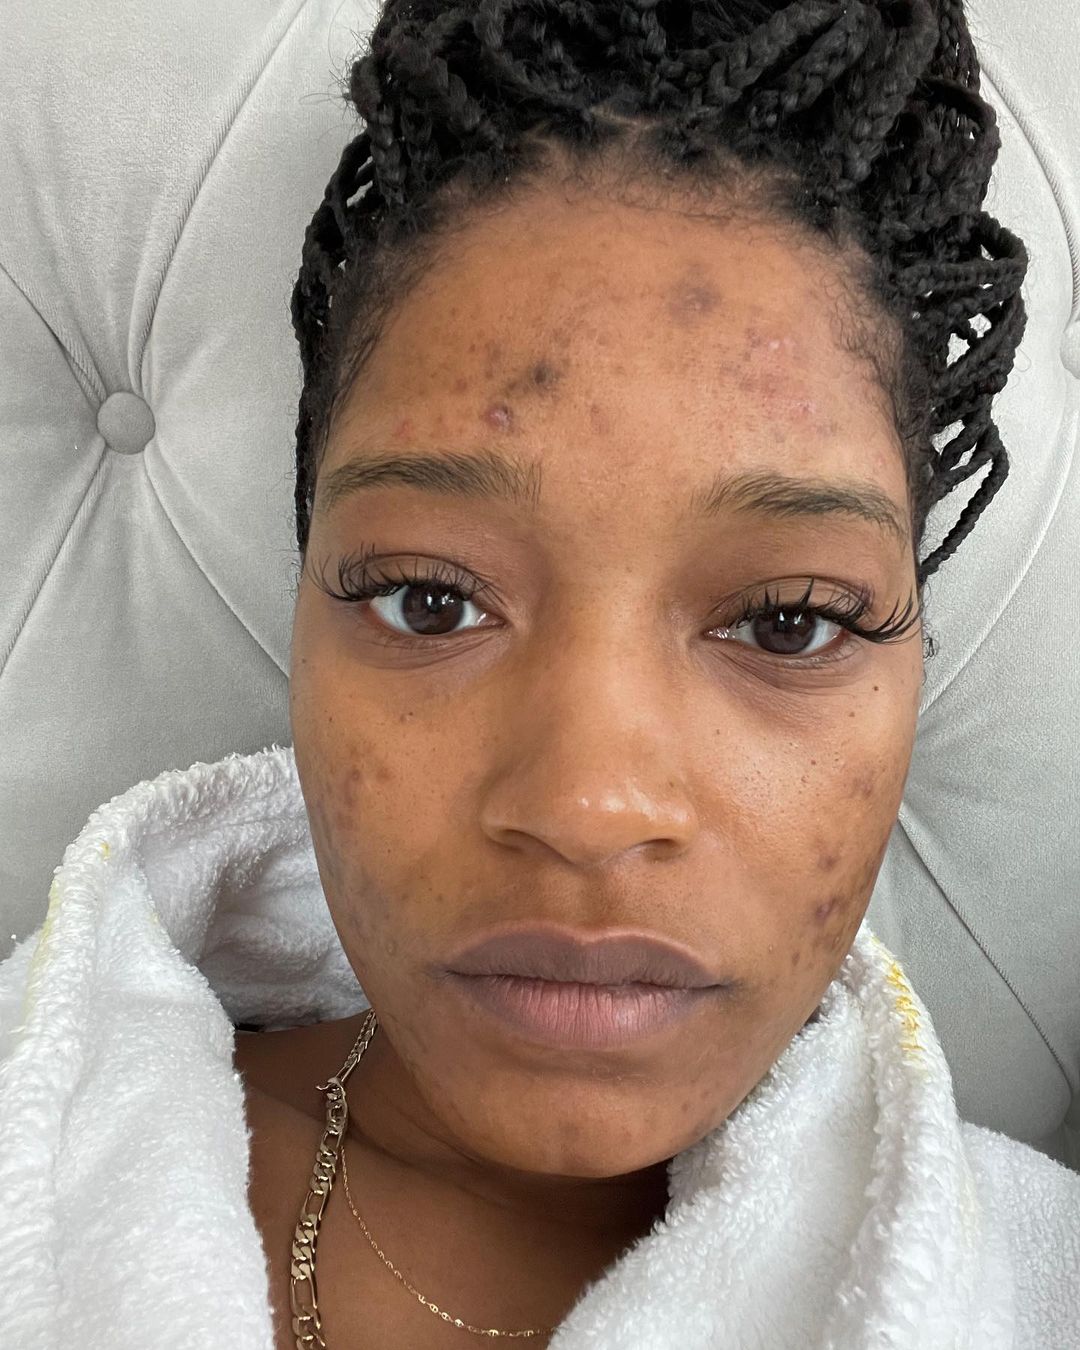 Keke Palmer showing her acne scars